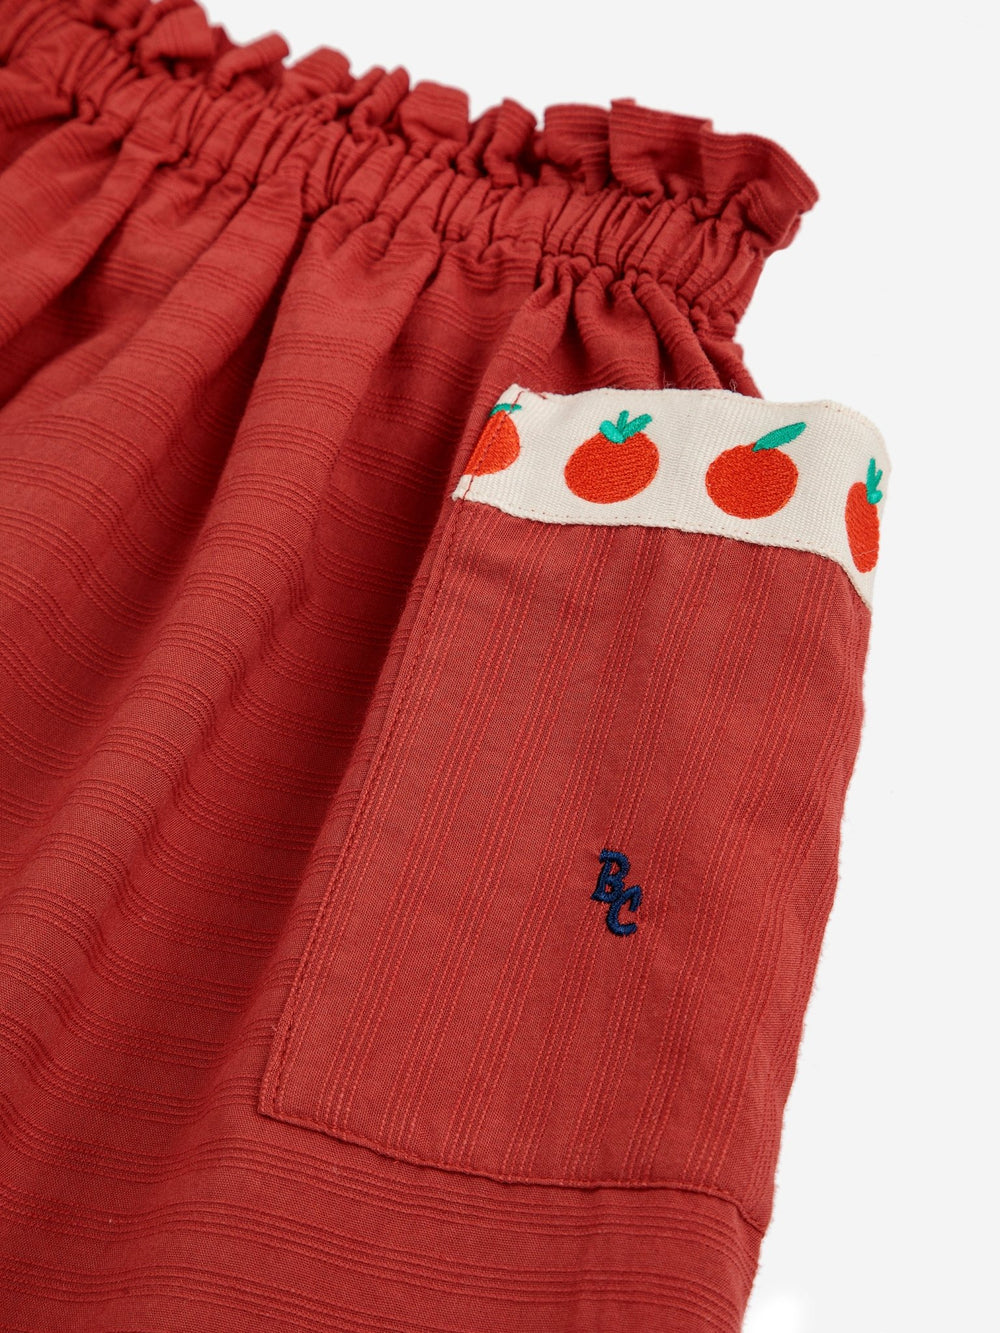 Pockets Woven Skirt - Burgundy Red - Posh New York